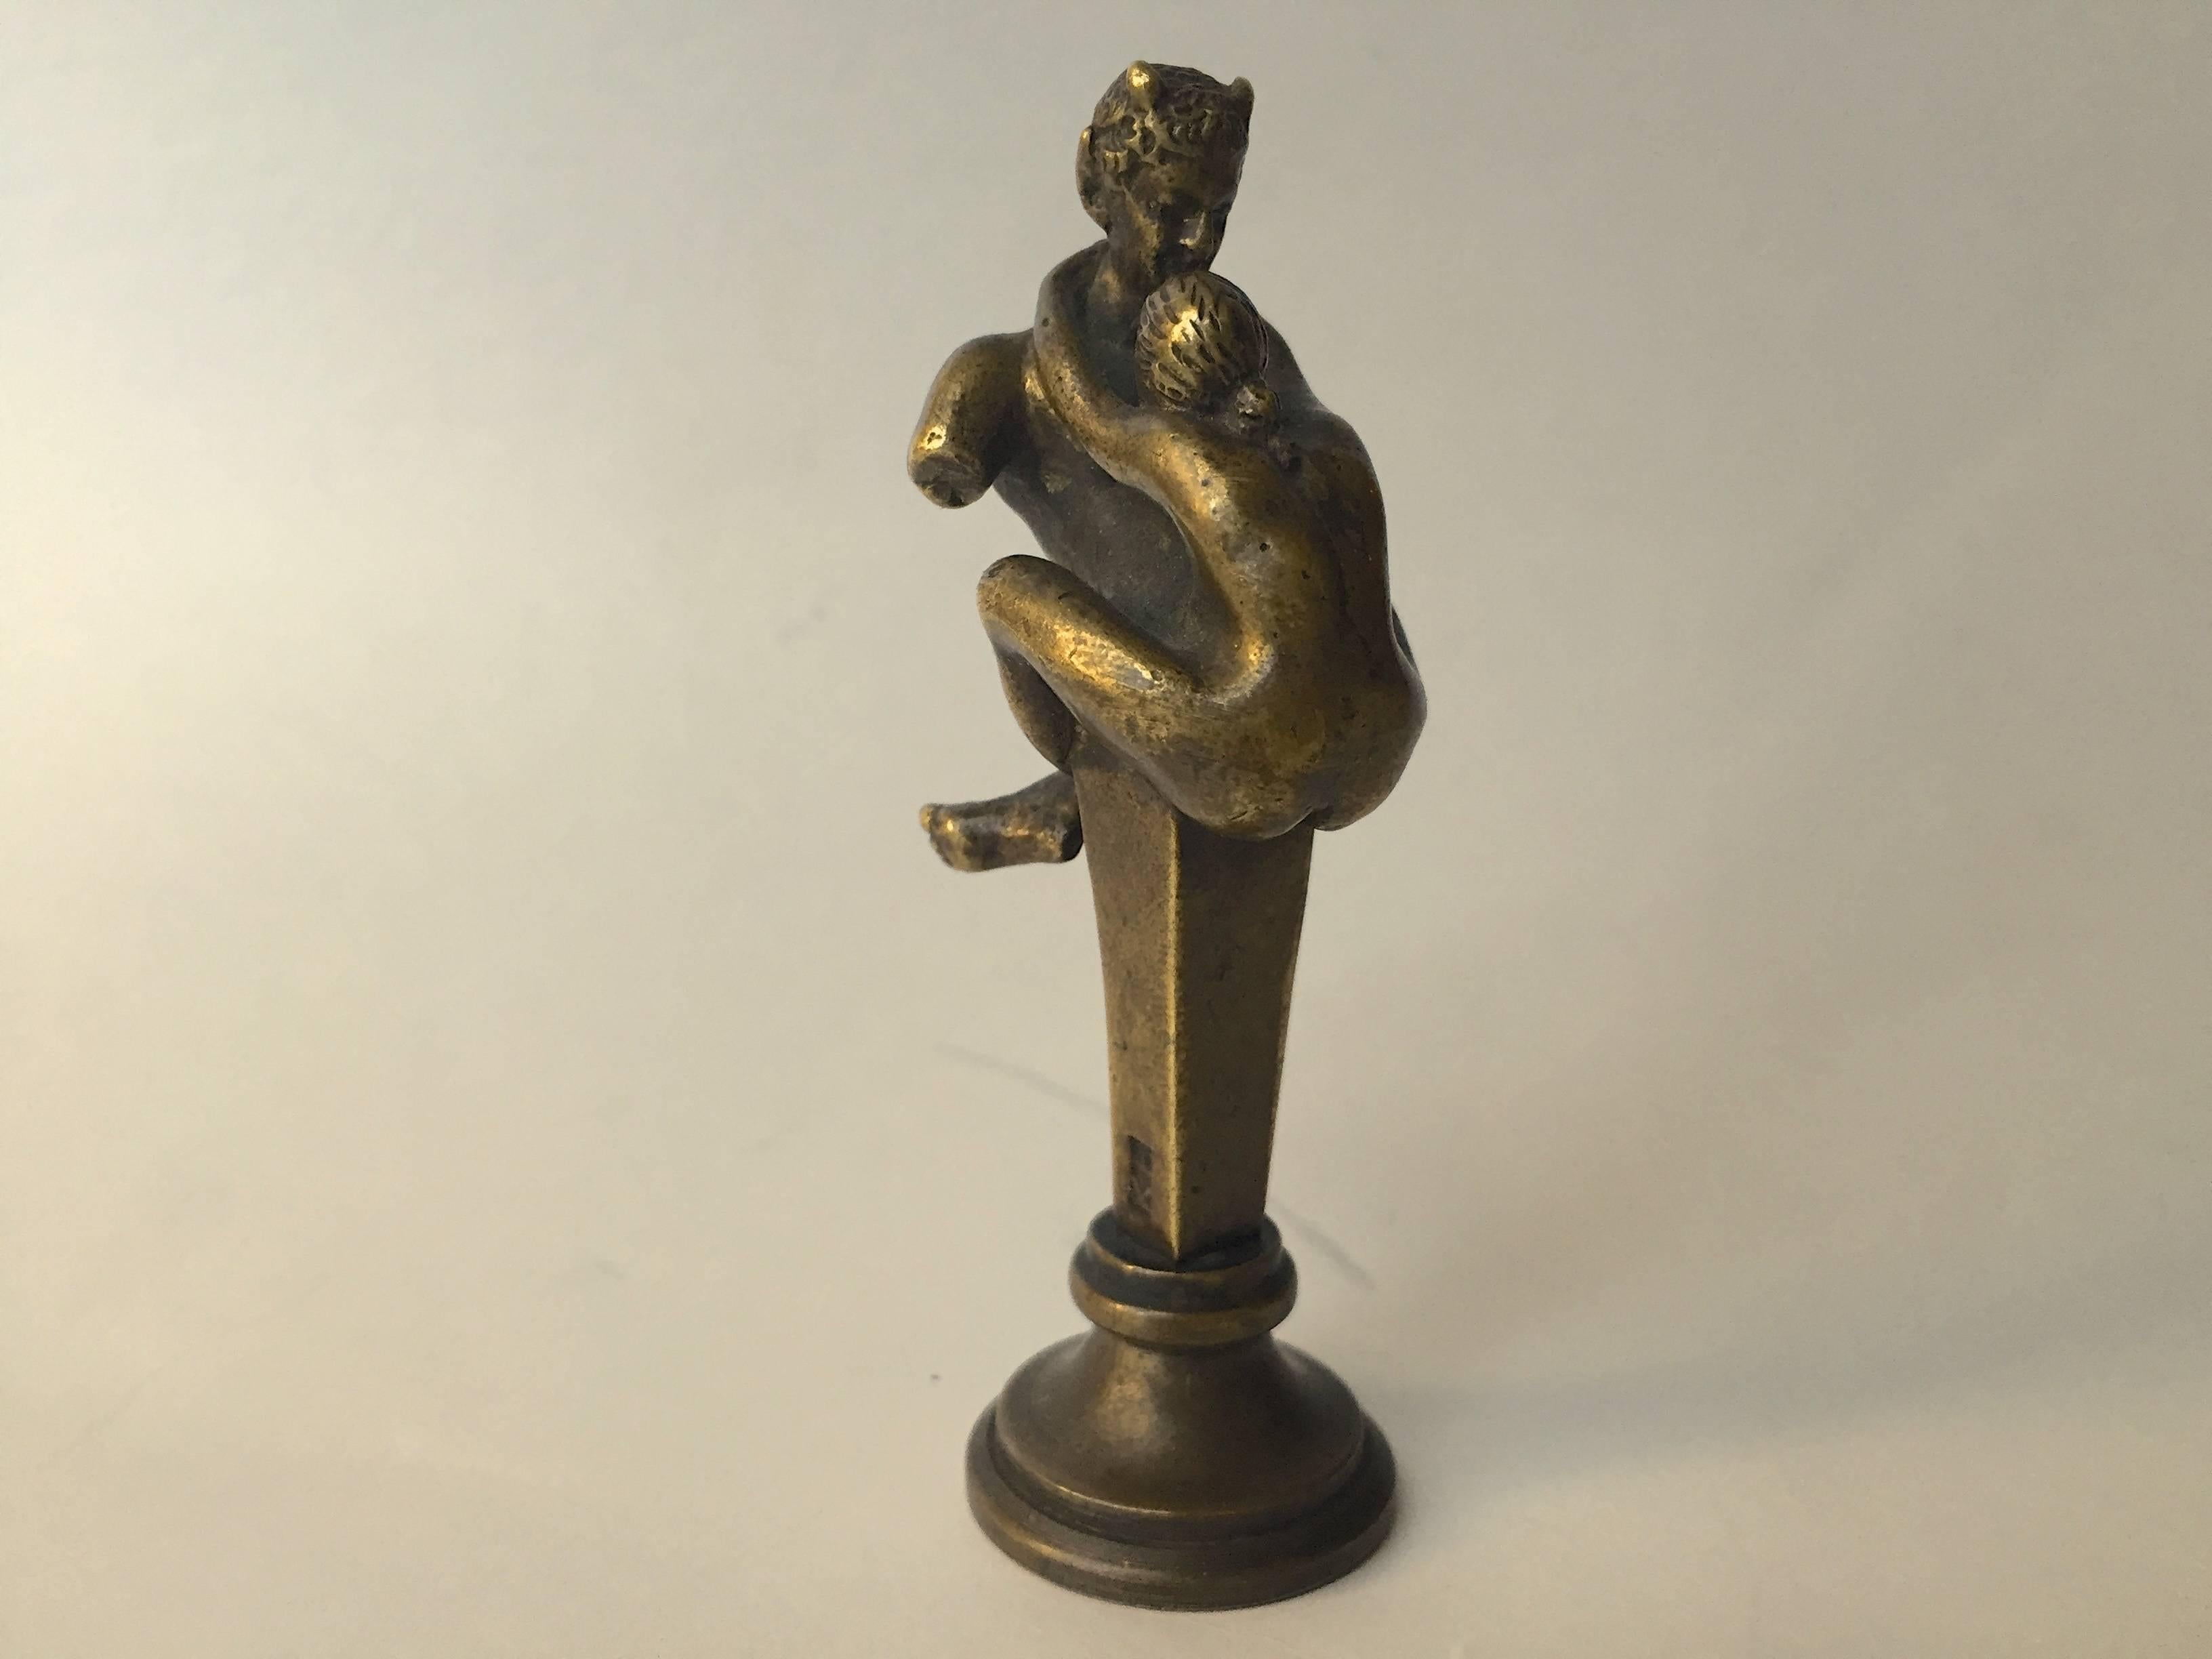 Cast Rare Austrian Miniature Bronze Wax Seal Erotic Subject Matter, 19th Century